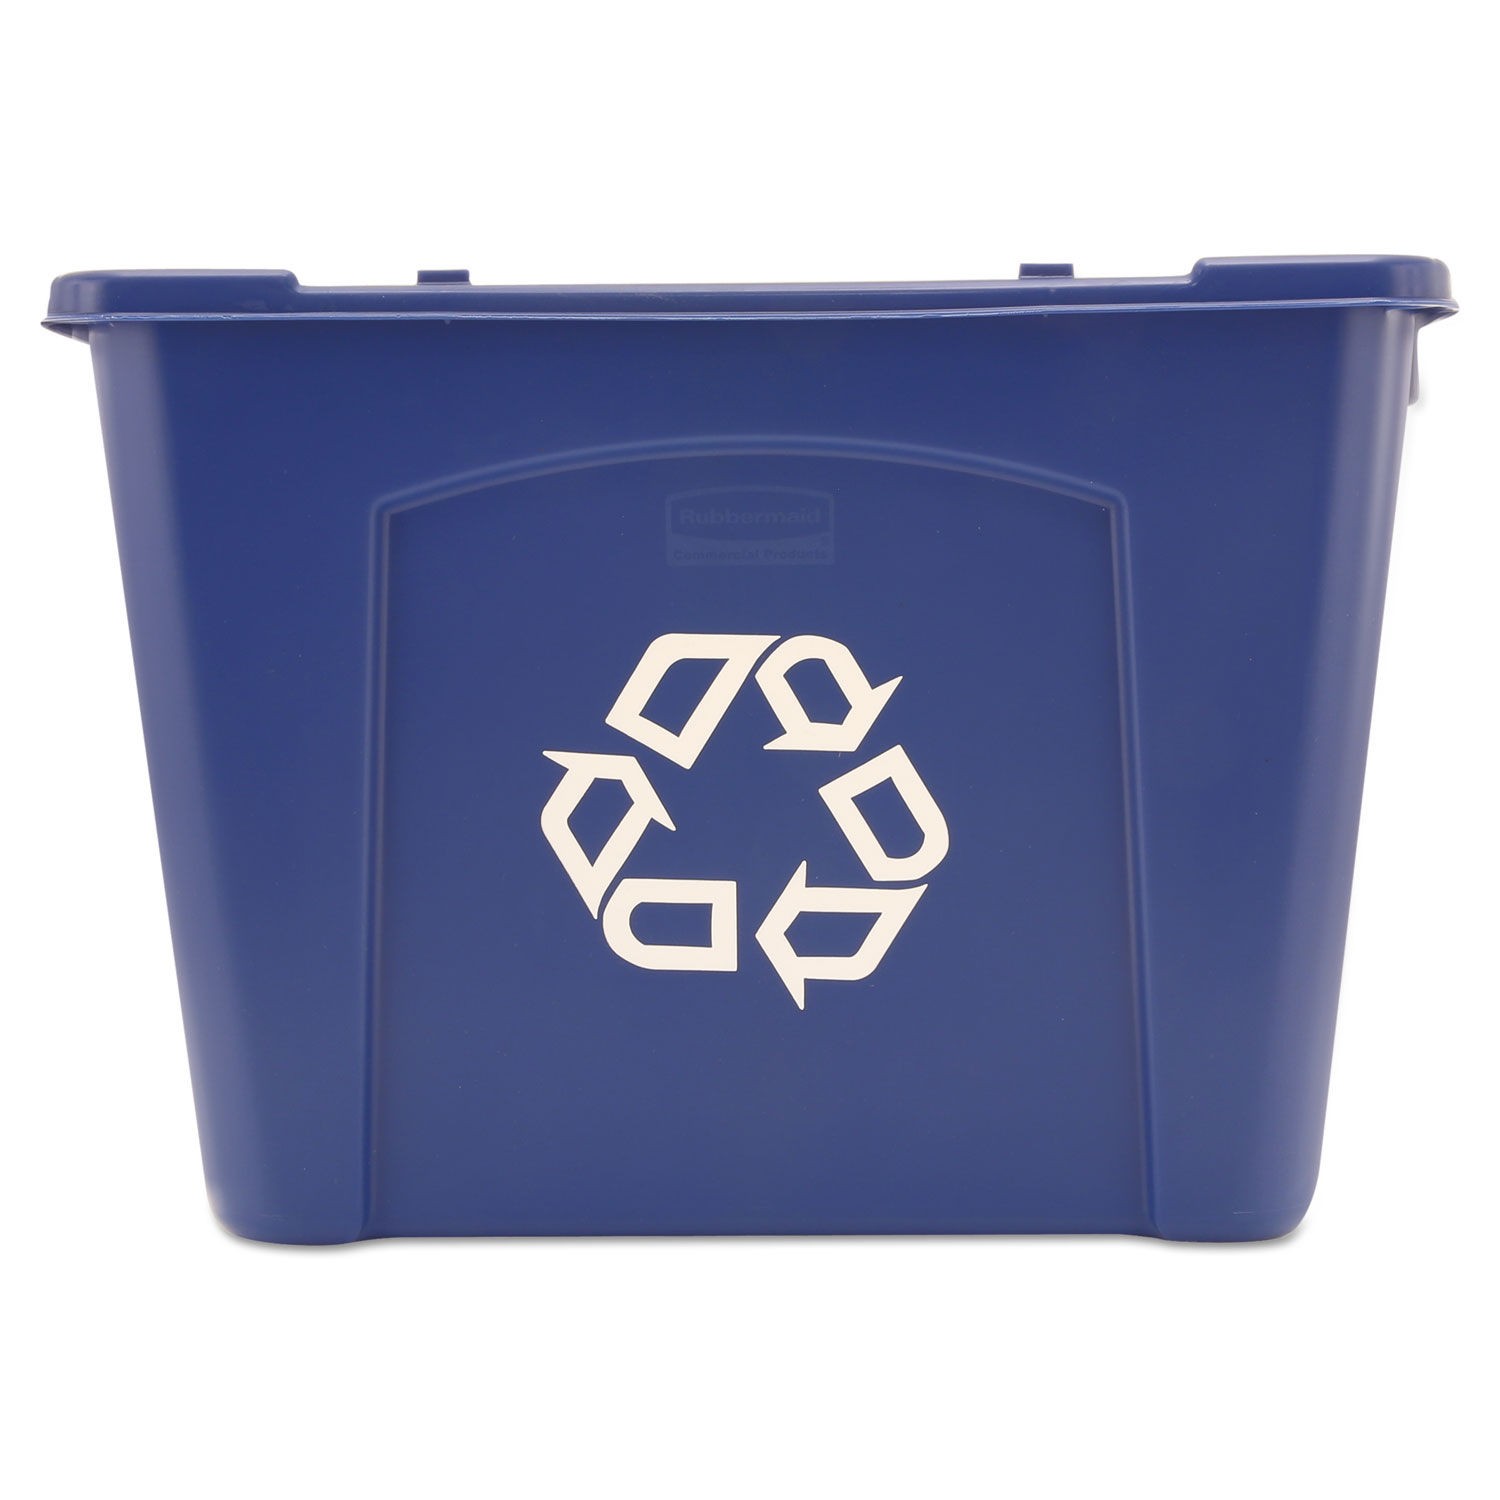 Winco PTCS-23L, 23 Gallon Blue Recycle Tall Square Plastic Trash